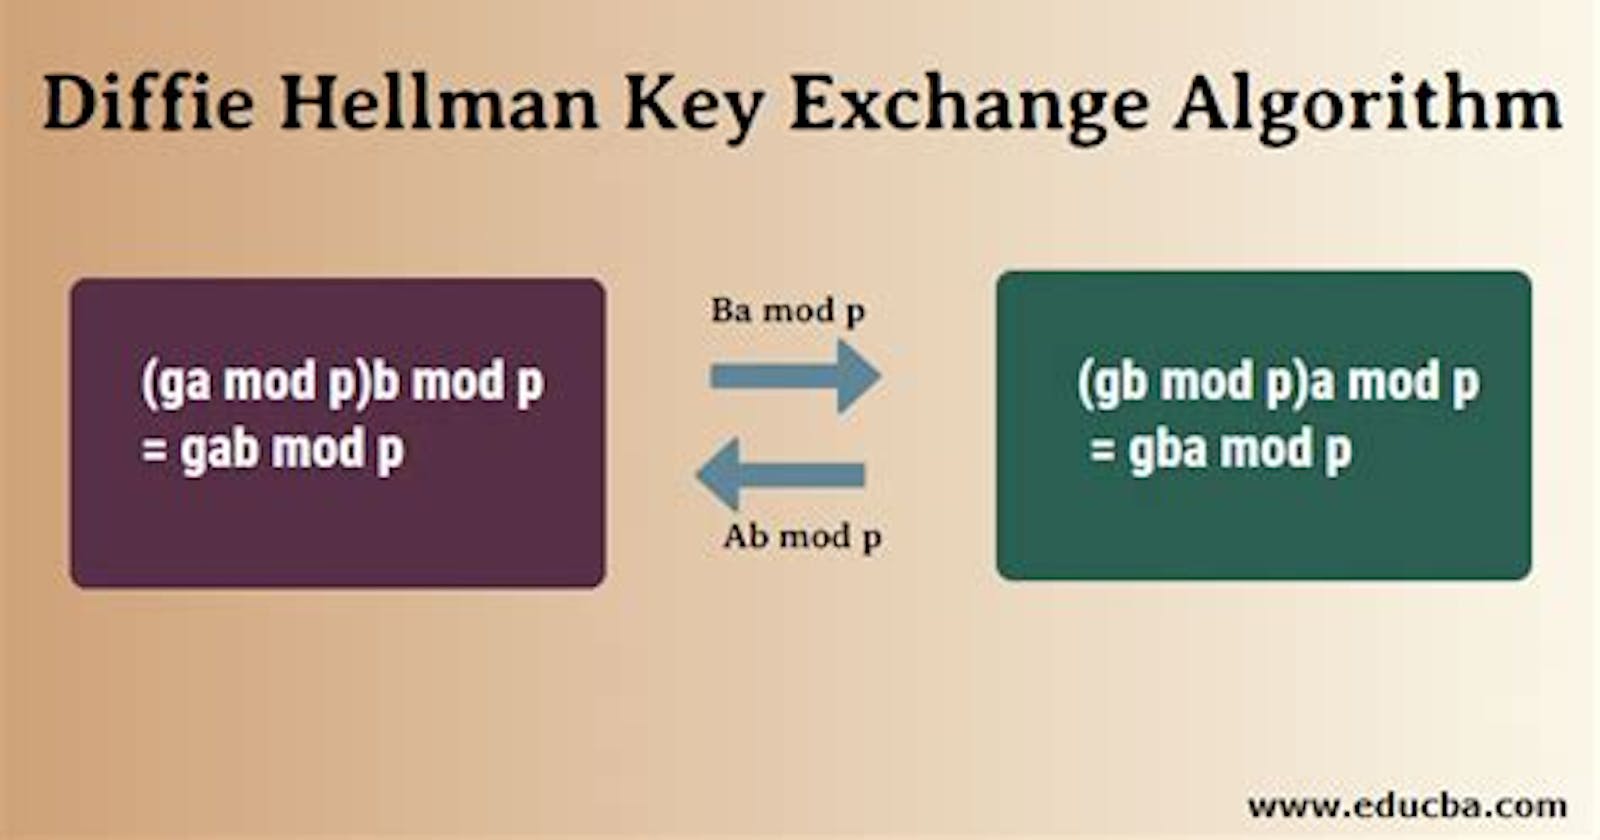 Cryptography|TryHackMe|Taks4:Diffie-Hellman Key Exchange